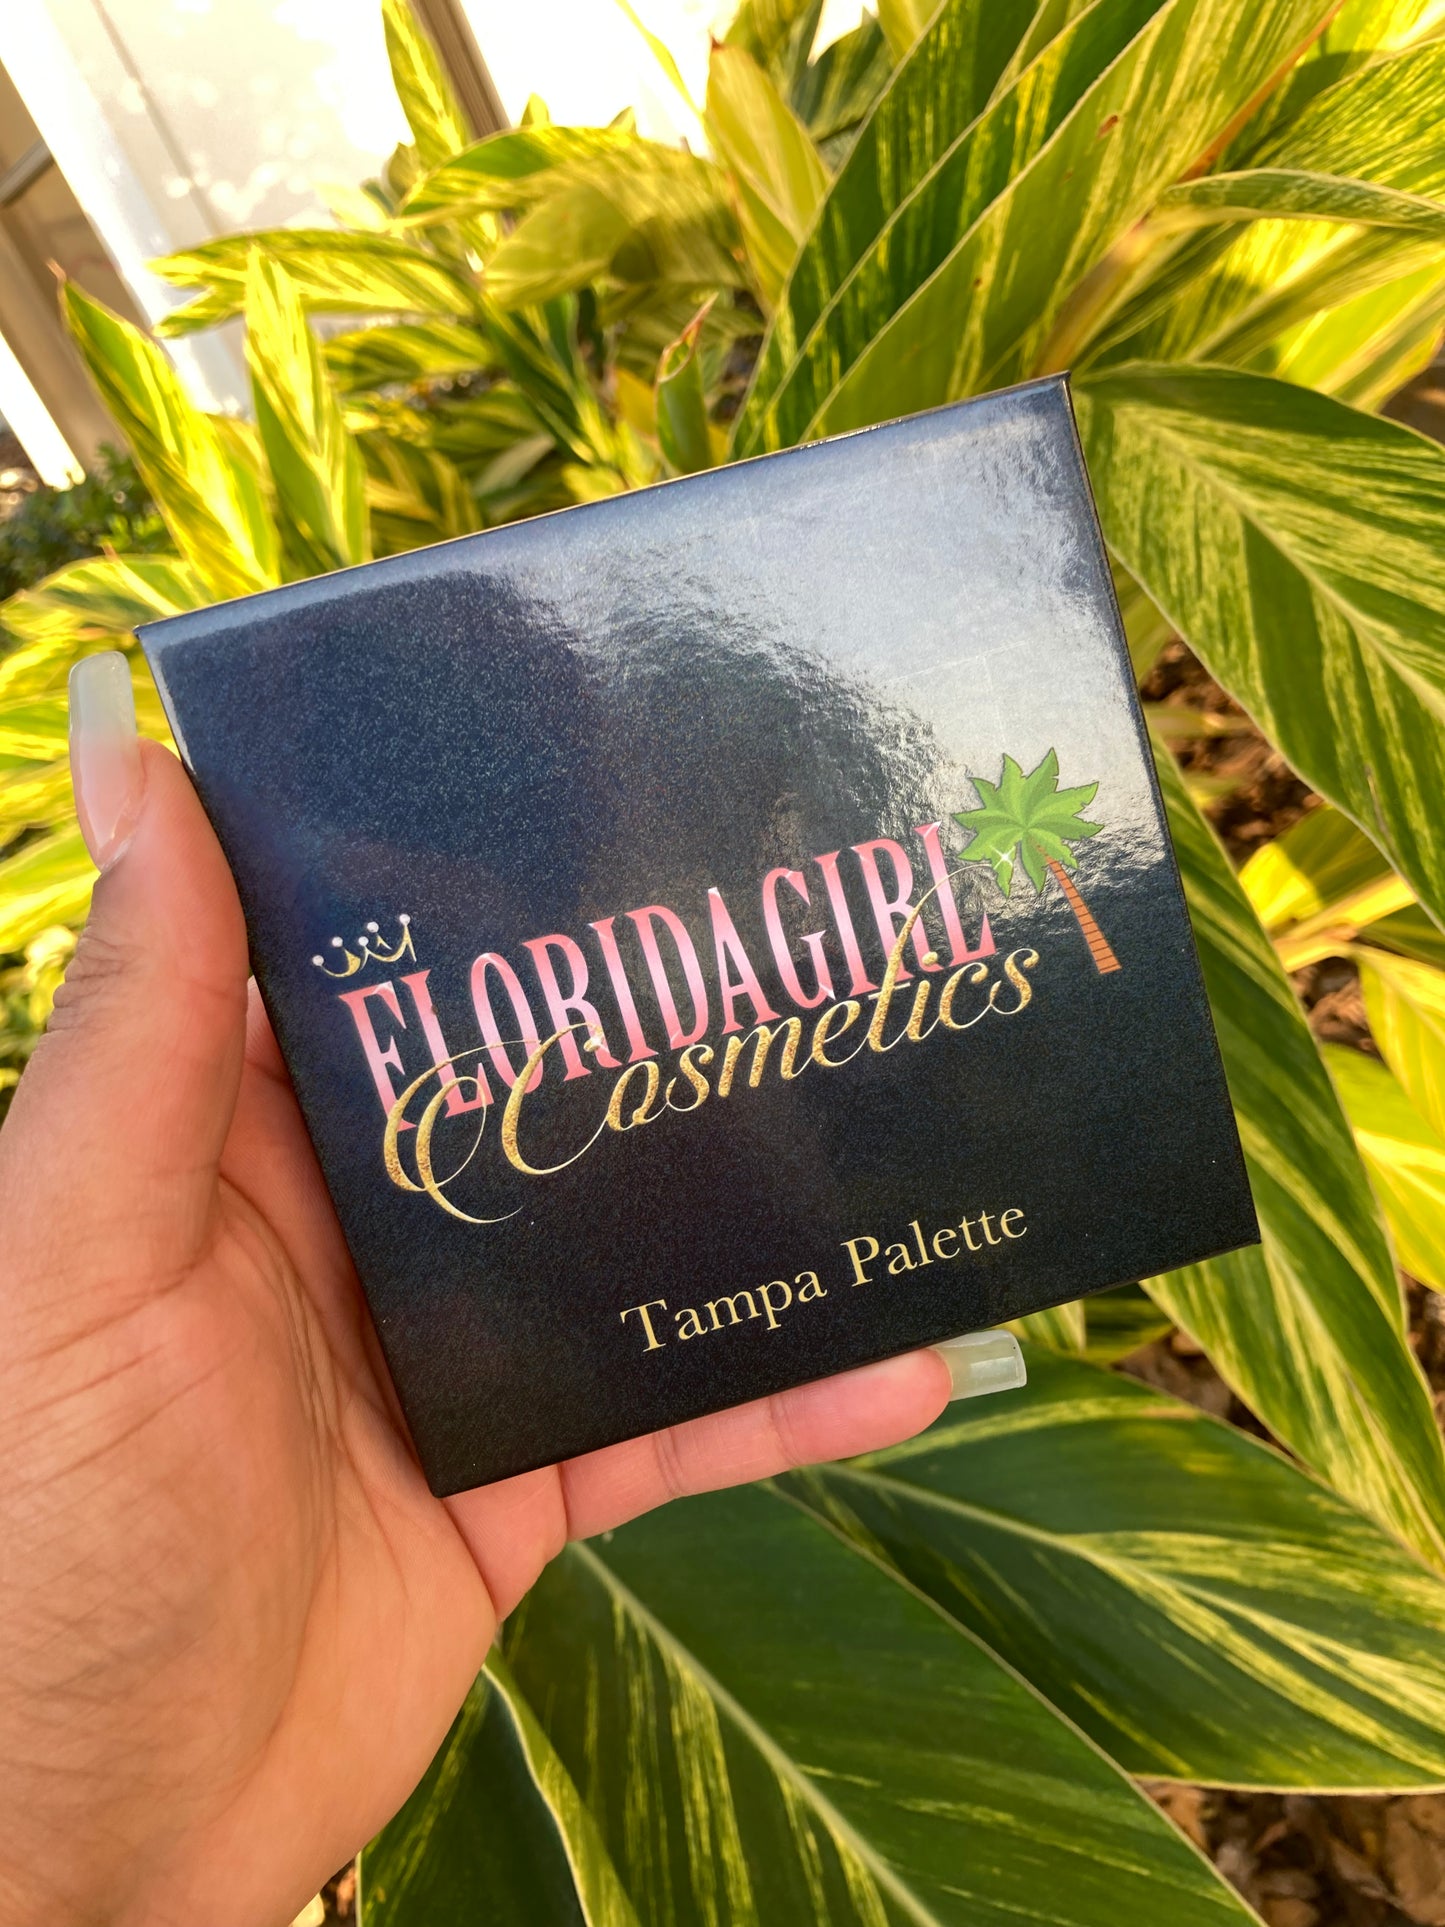 Tampa Palette